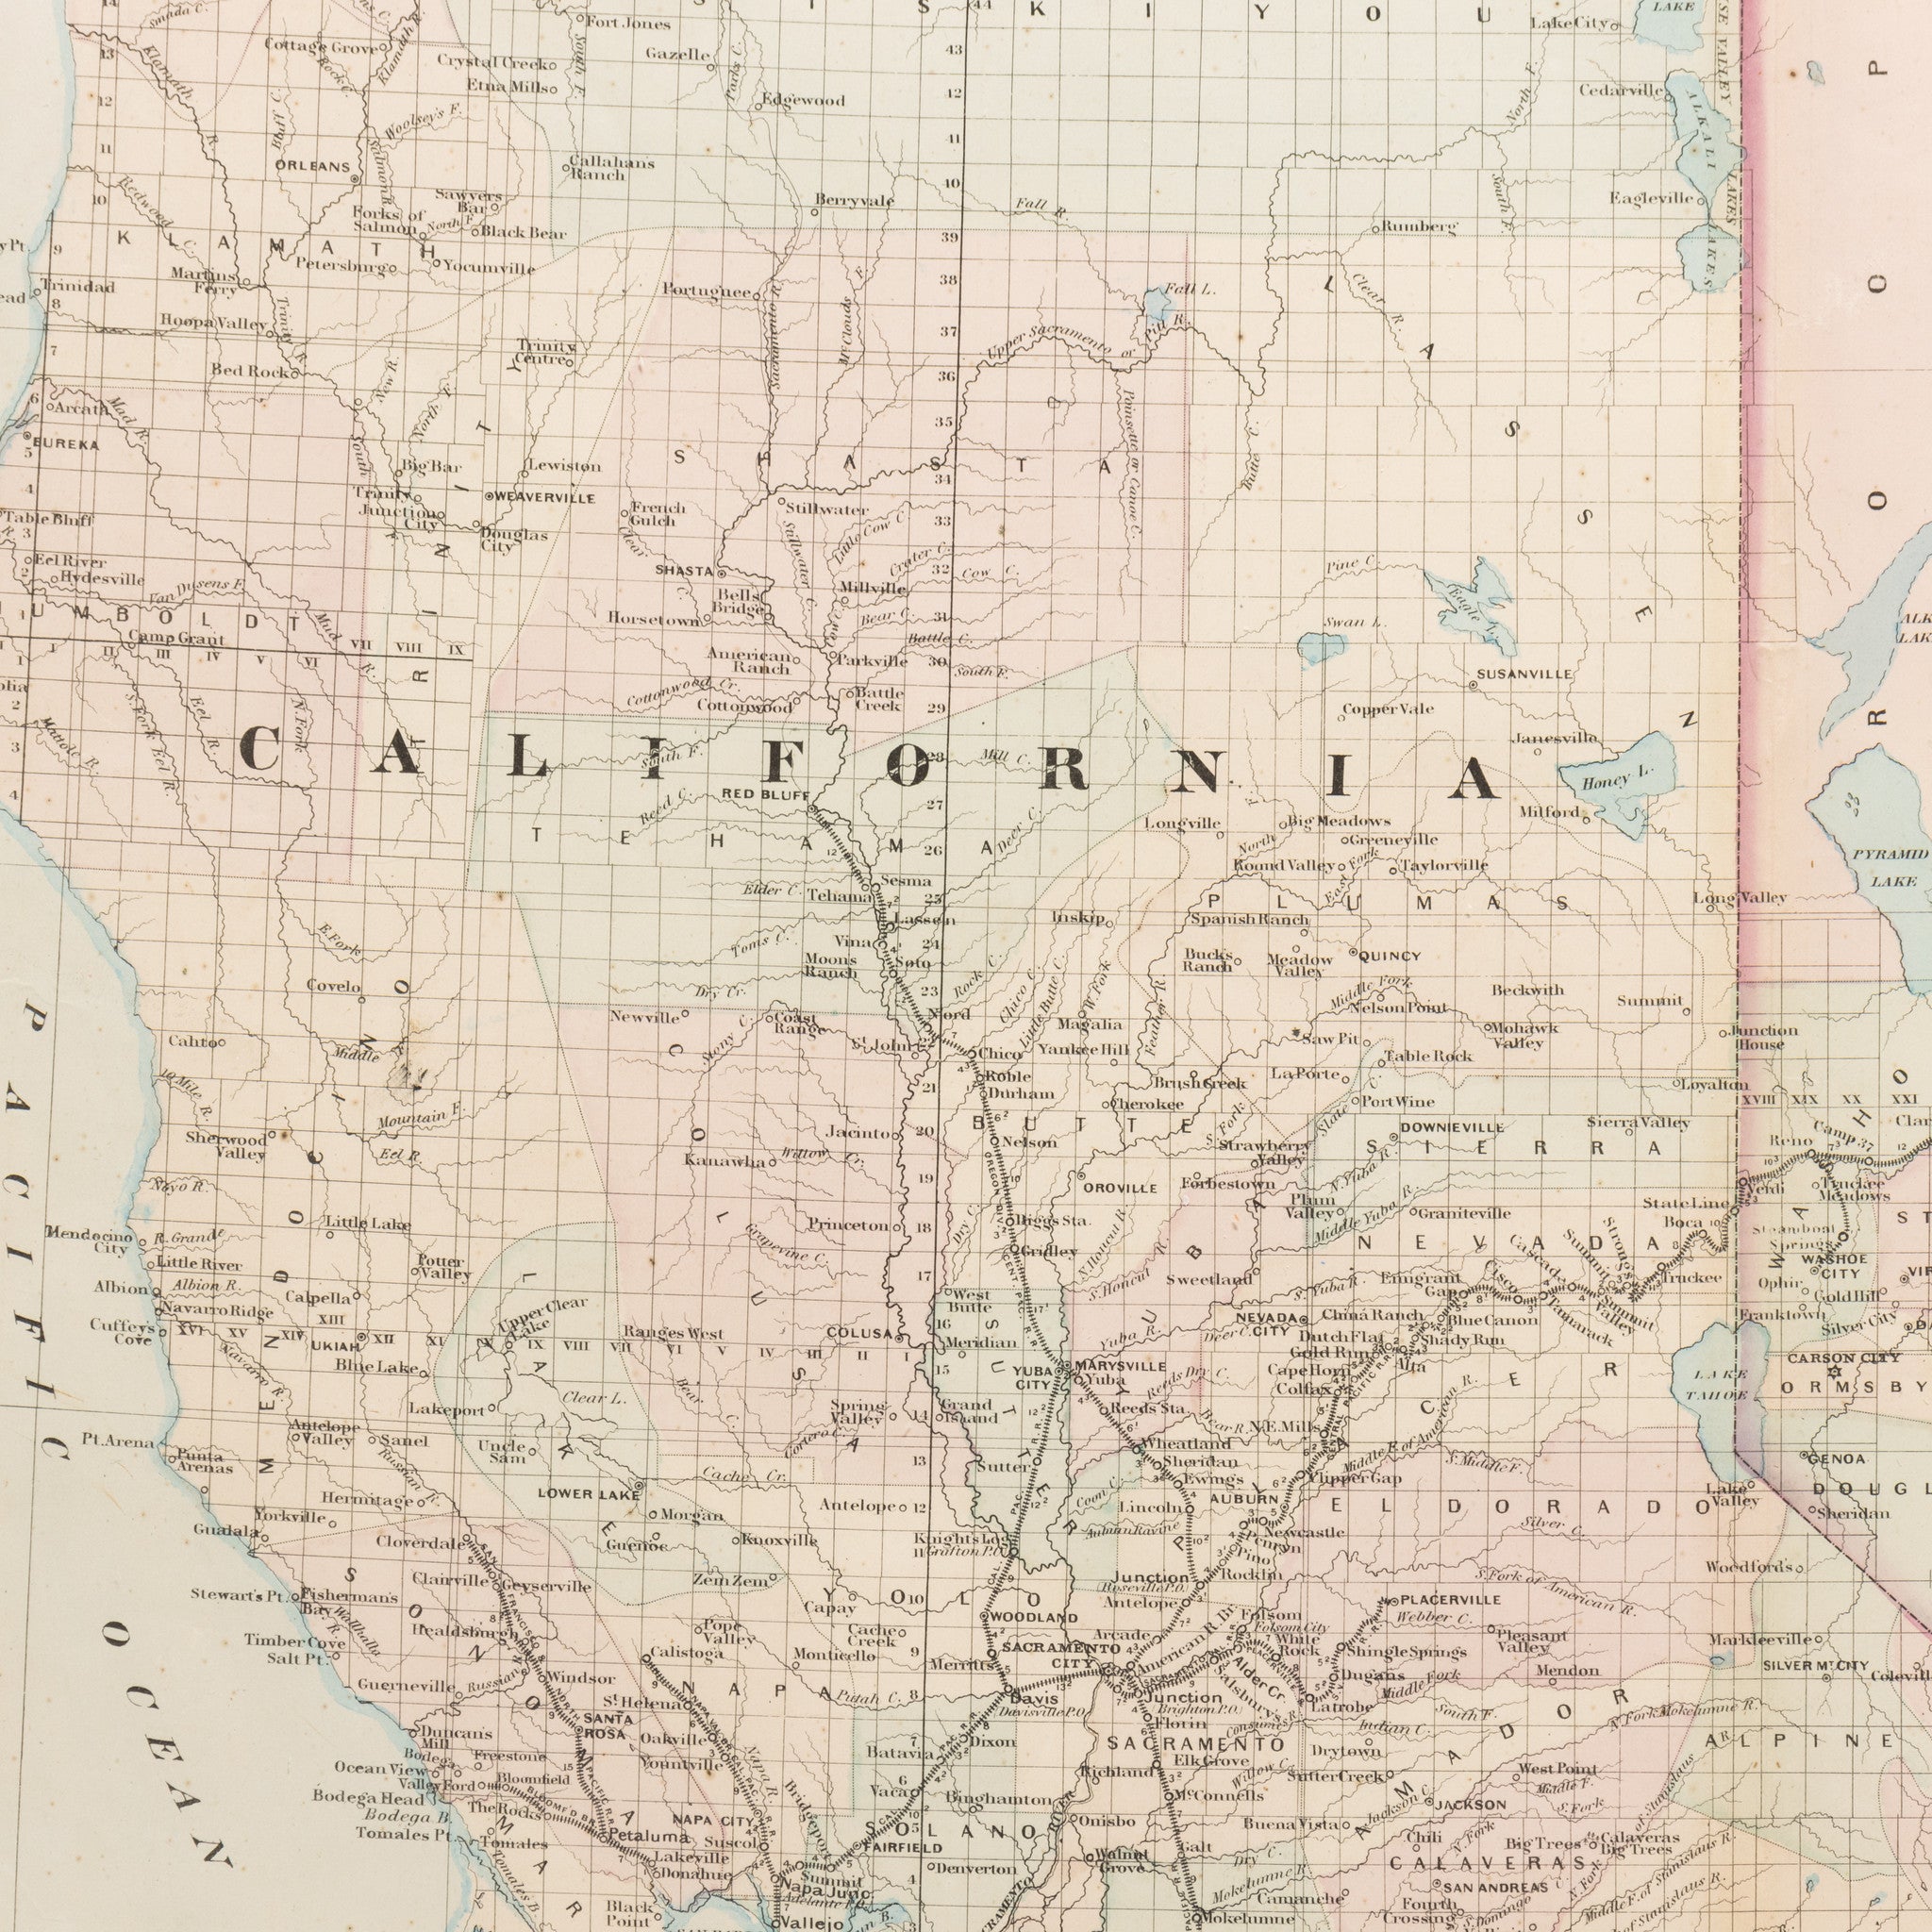 California and Nevada Map 1872